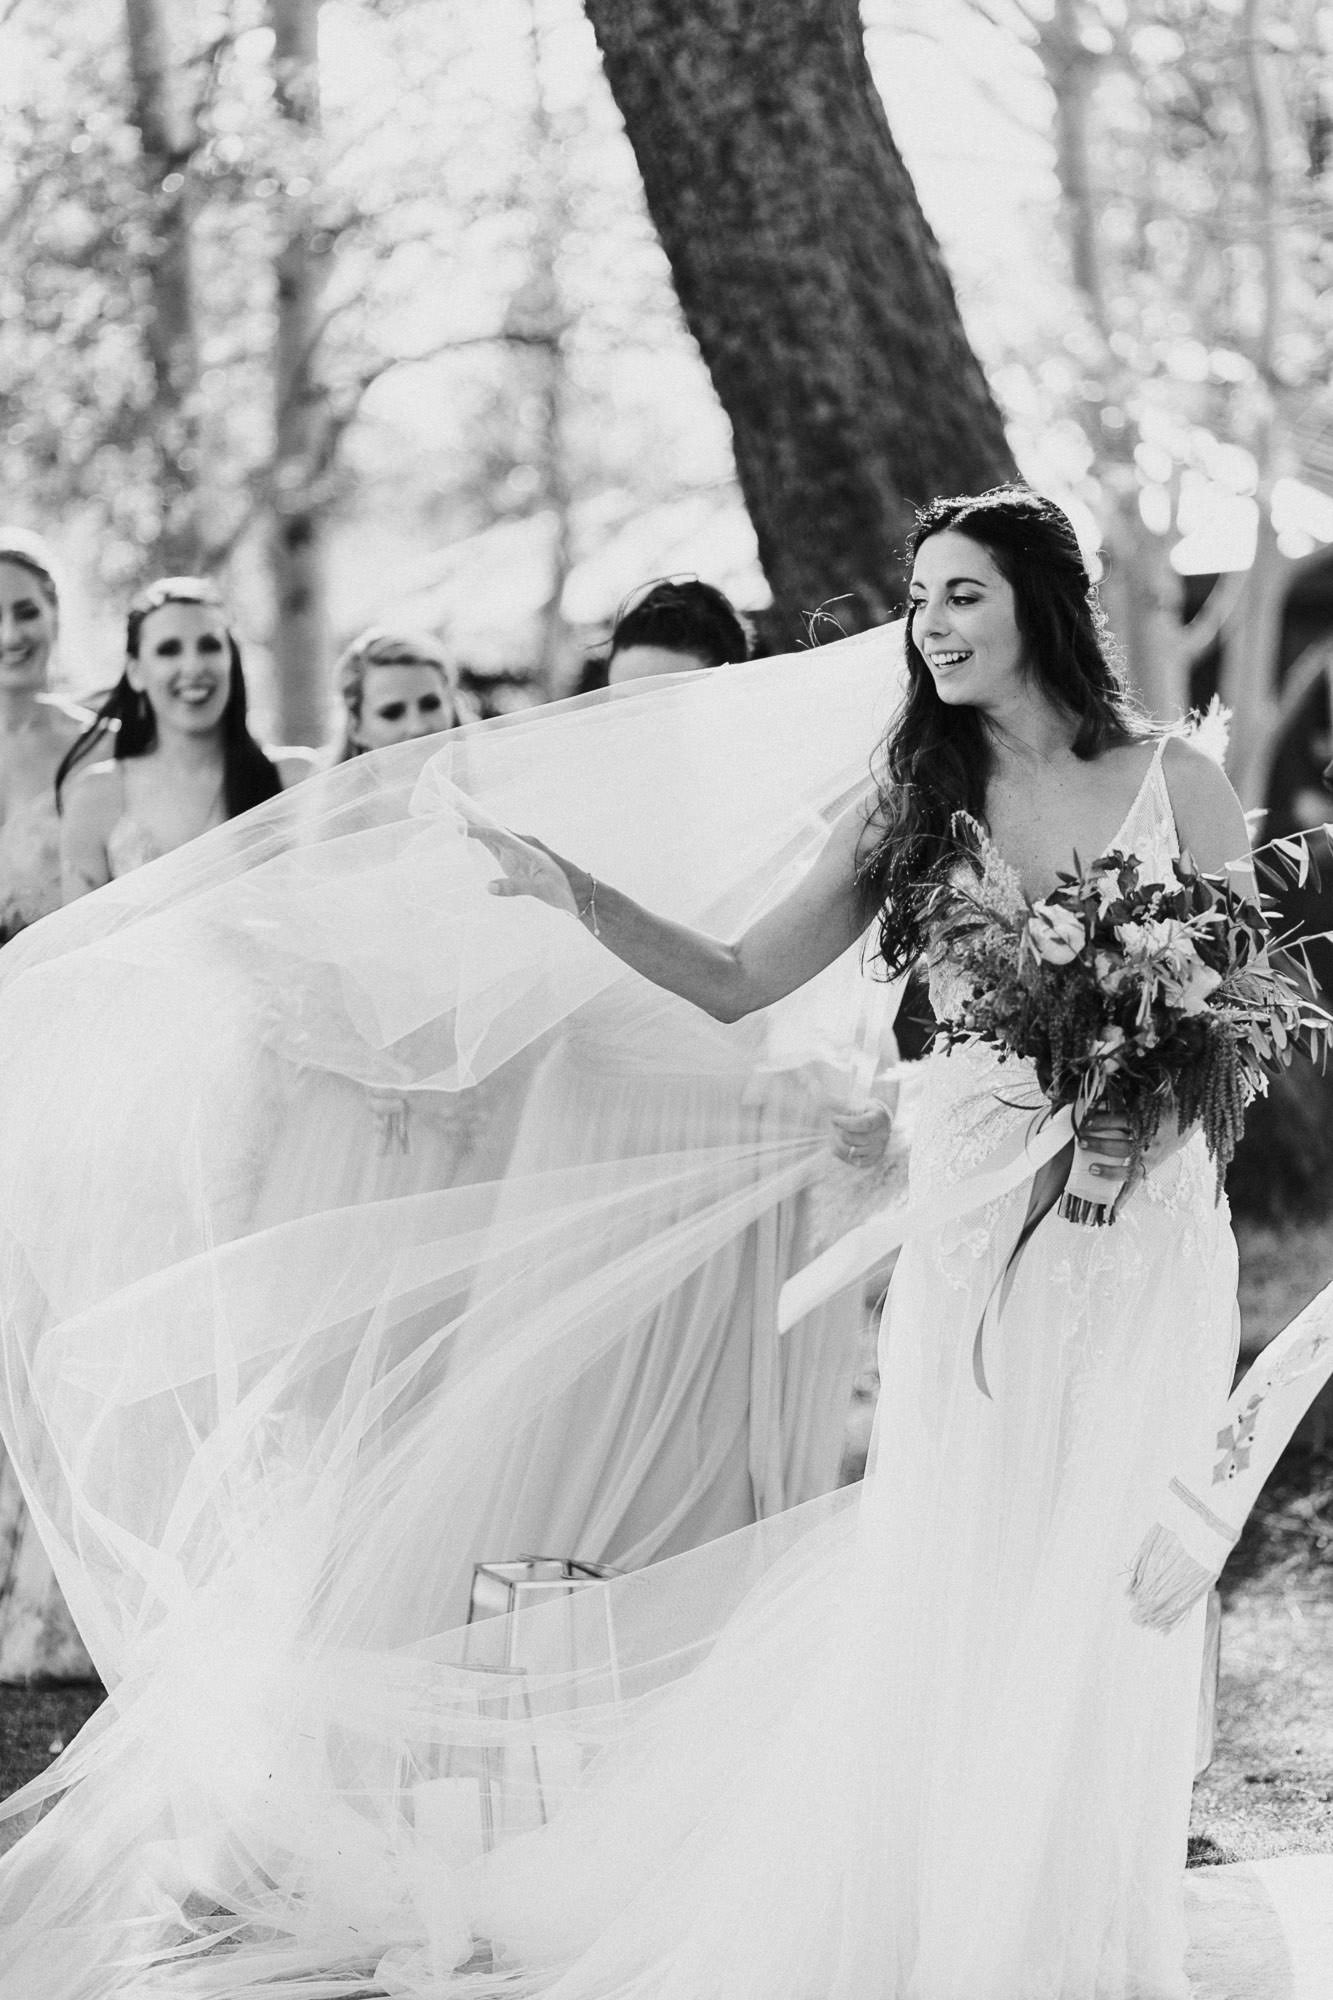 Wind blows bride's veil during wedding ceremony at Broken Top Club in Bend, Oregon